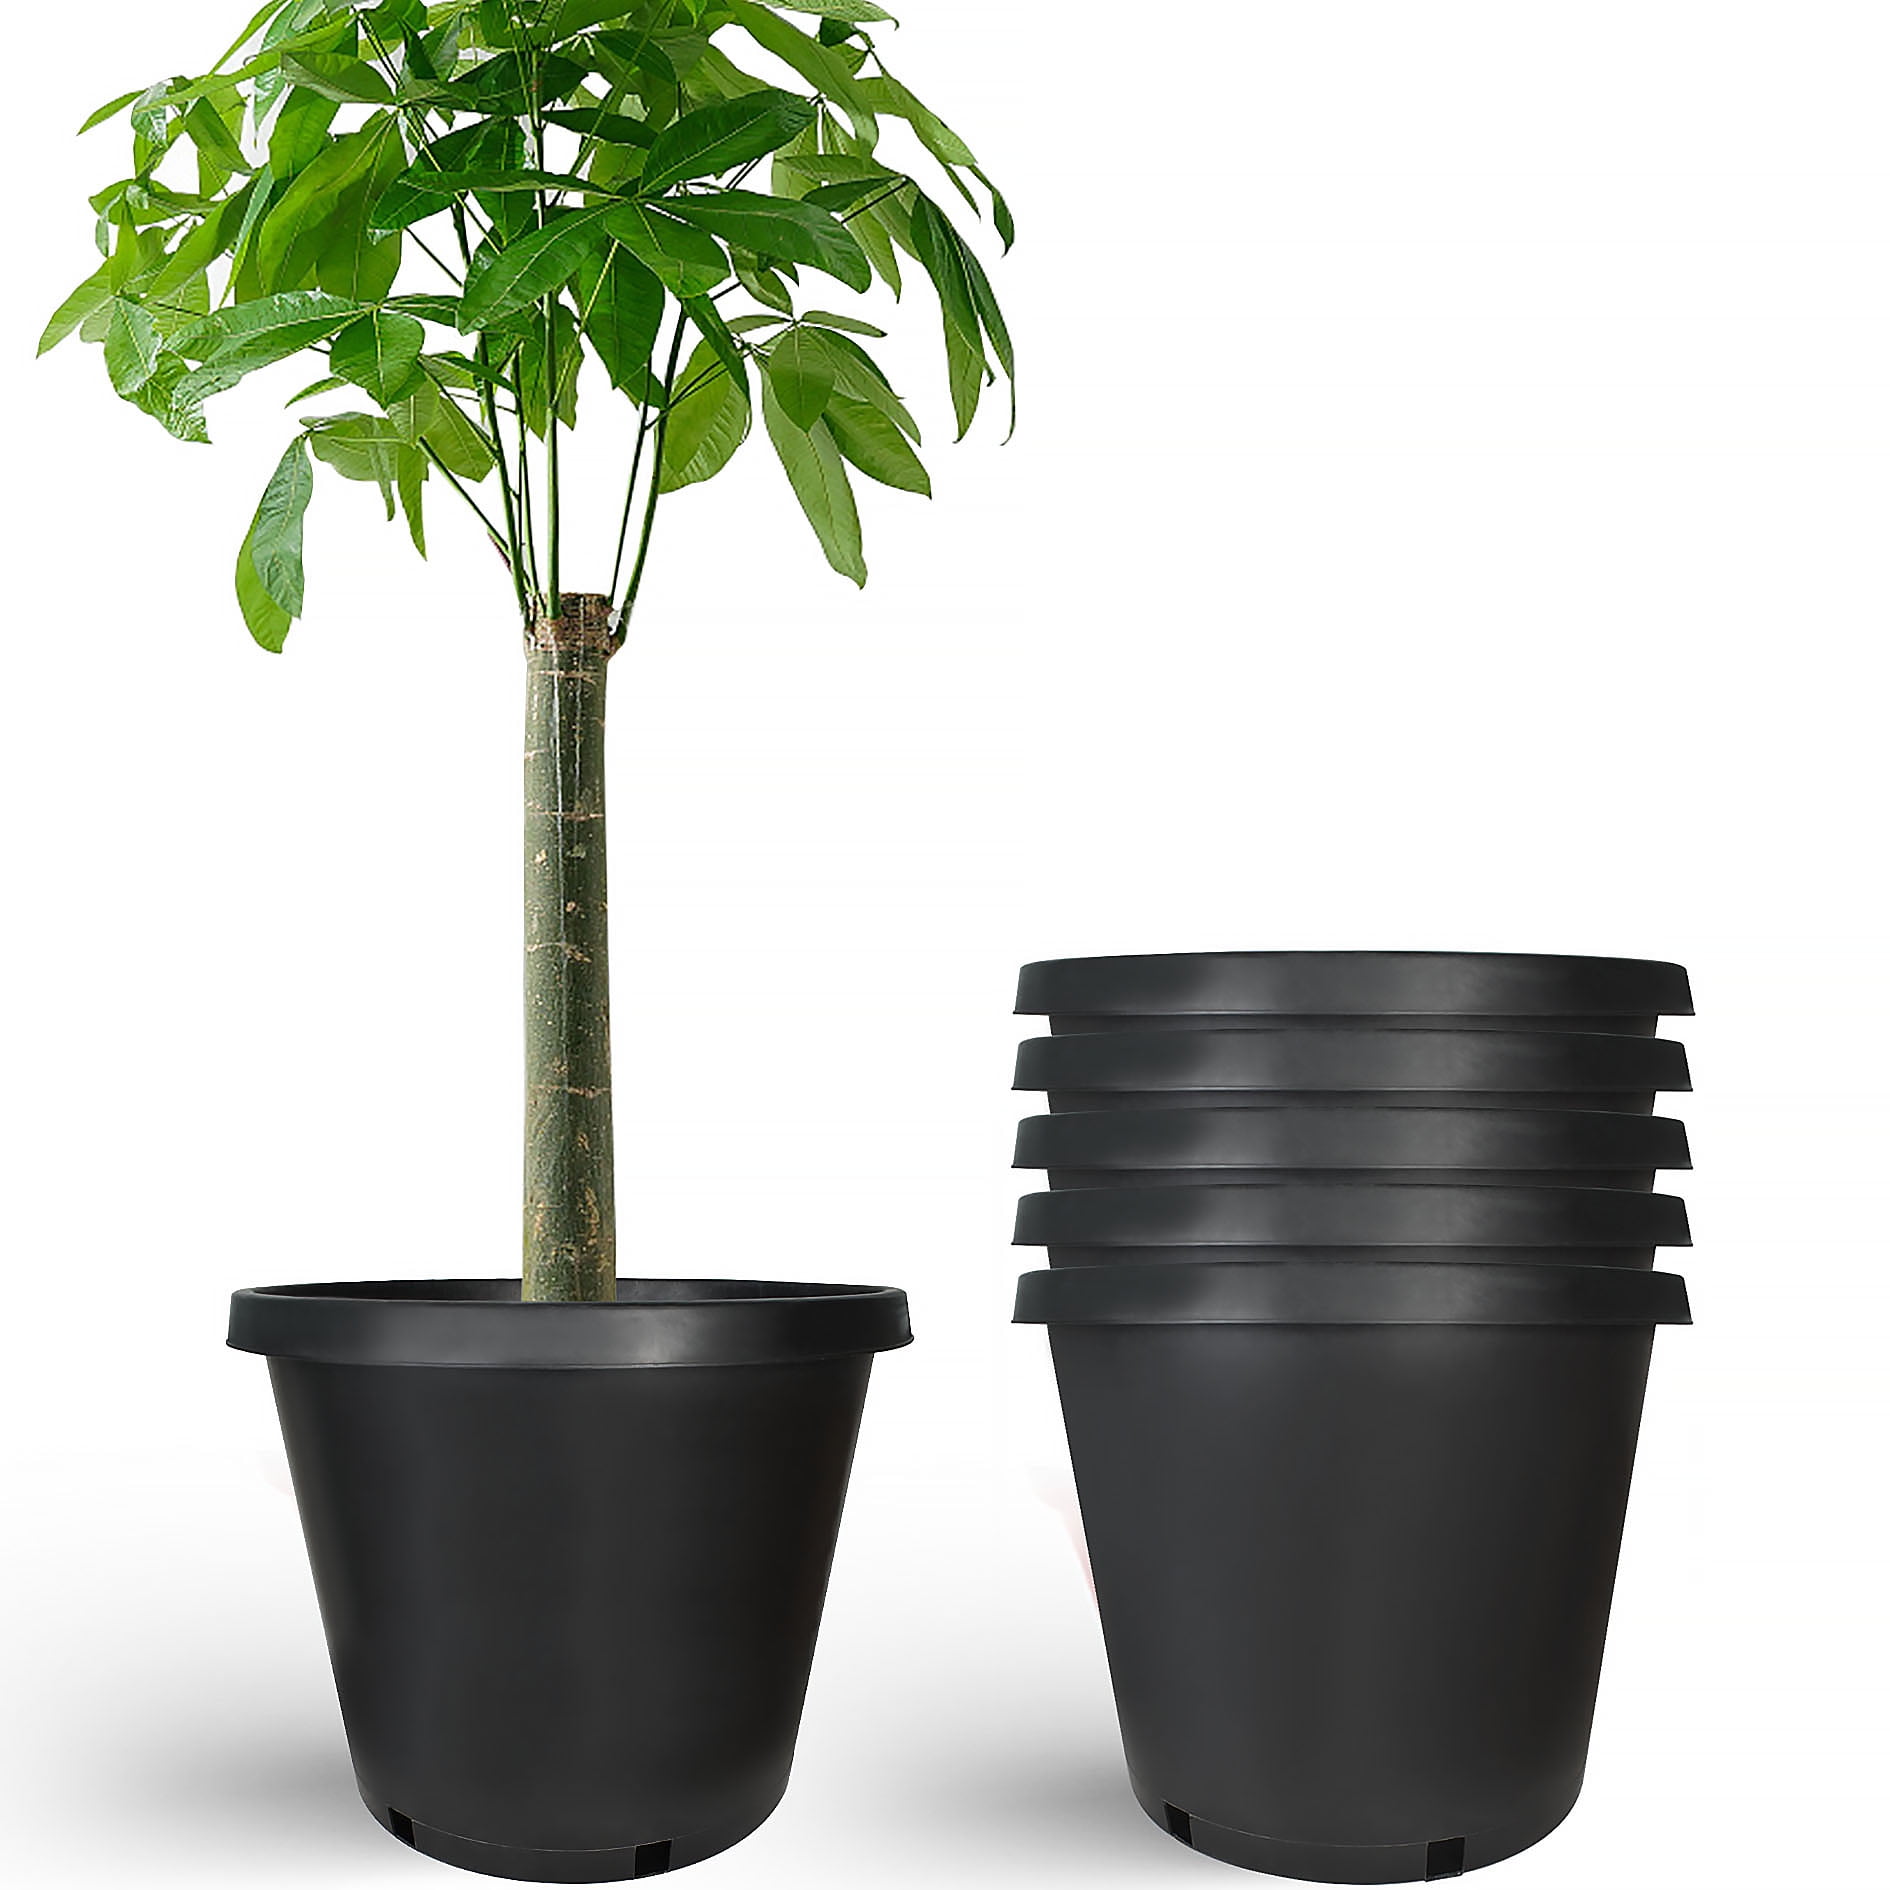 Premium Black Plastic Nursery Plant Container Garden Planter Pots